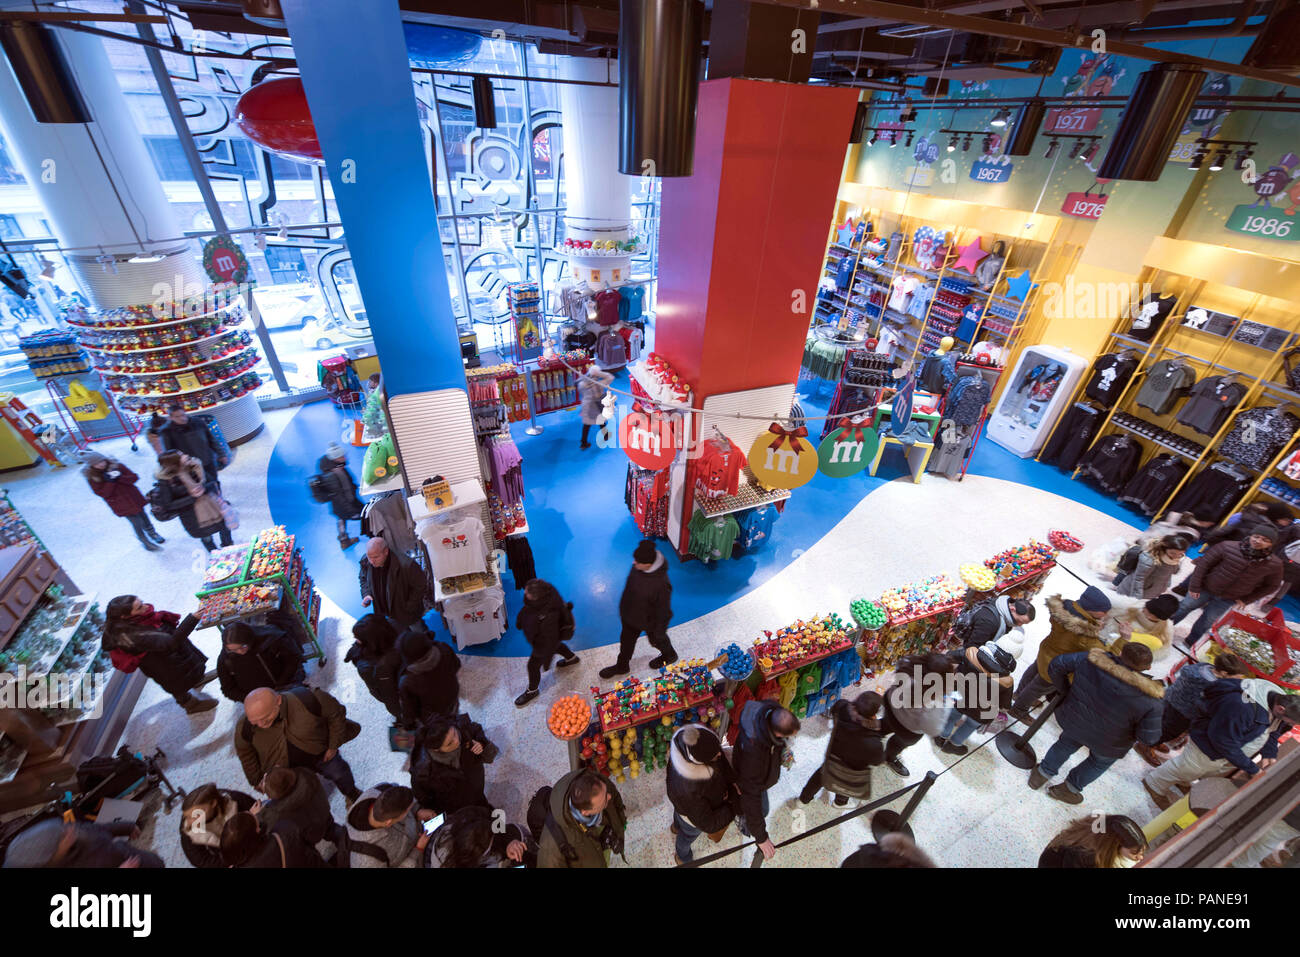 The M&M World Store in Times Square, Manhattan, New York City, U.S.A., January 02, 2018     Photo © Fabio Mazzarella/Sintesi/Alamy Stock Photo Stock Photo